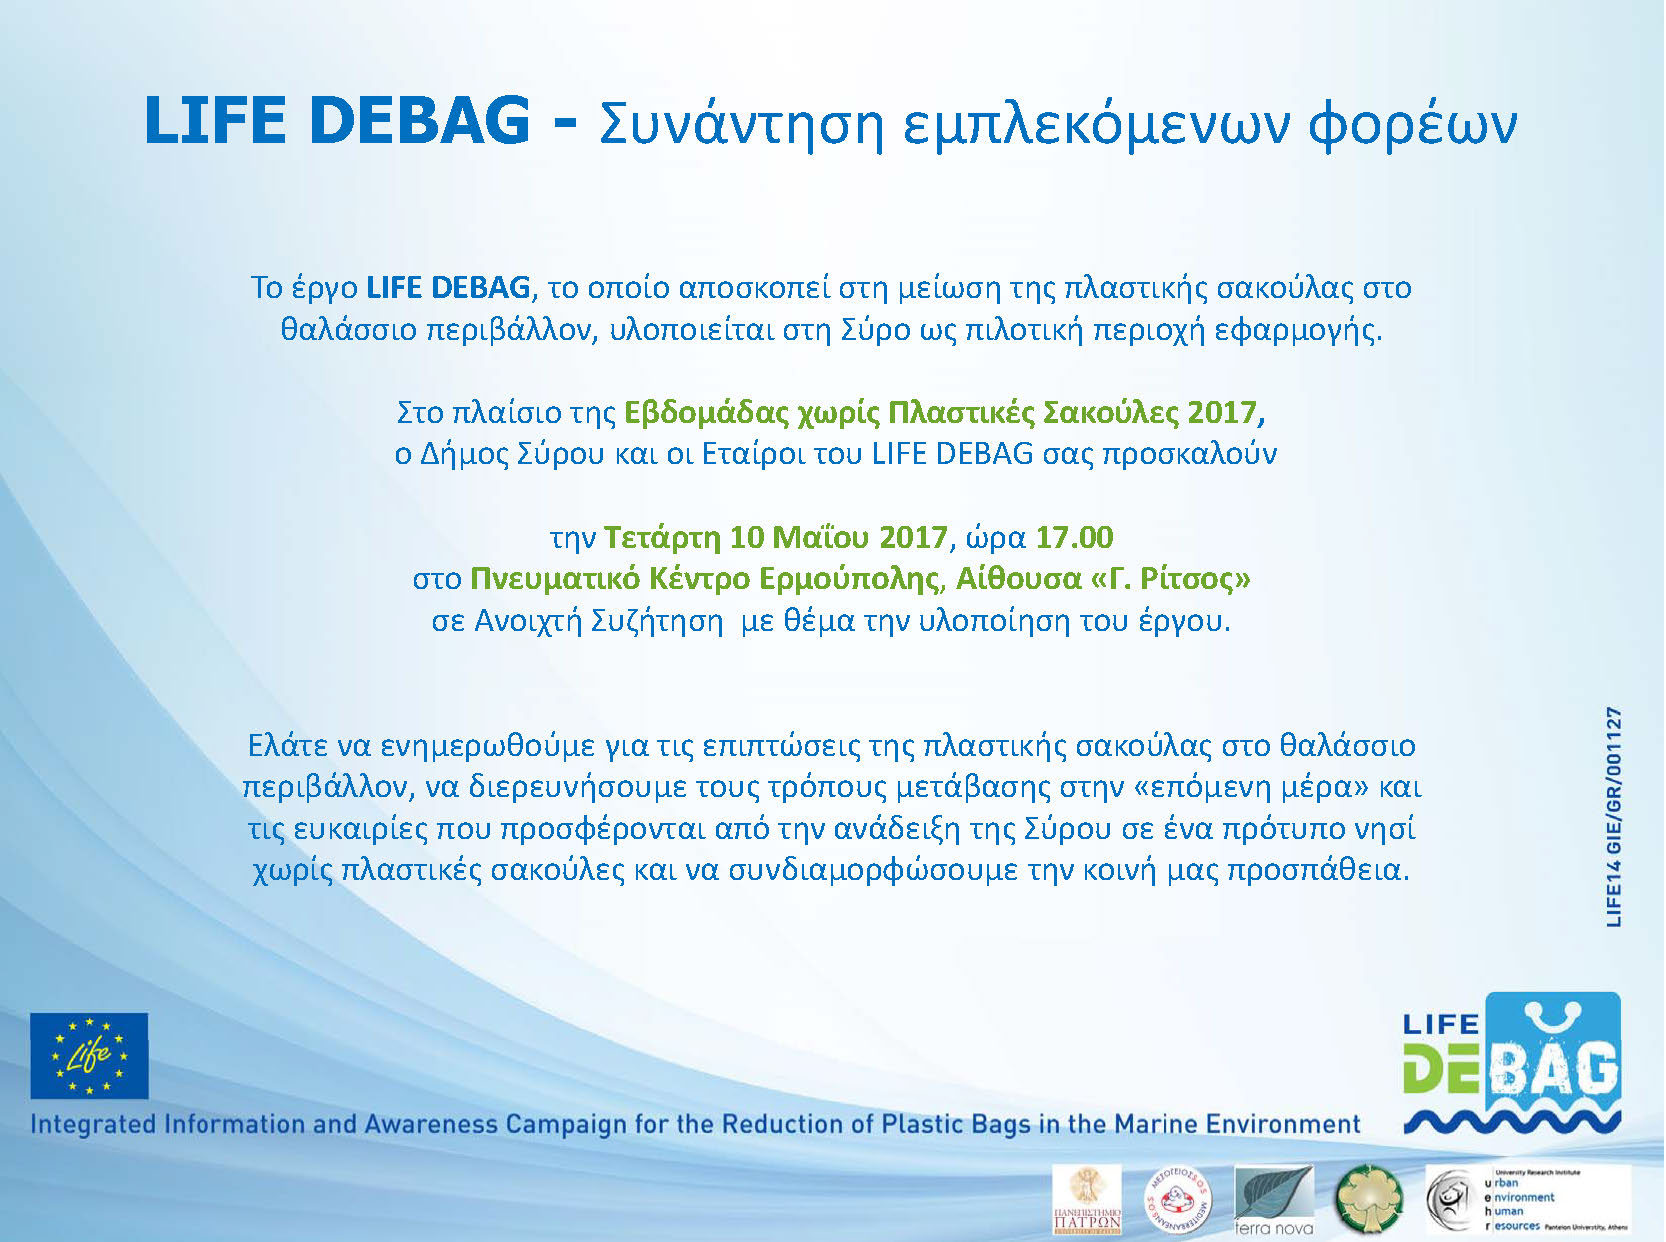 LIFE DEBAG – Ολοκληρωμένη εκστρατεία ενημέρωσης και ευαισθητοποίησης για τη μείωση της πλαστικής σακούλας στο θαλάσσιο περιβάλλον